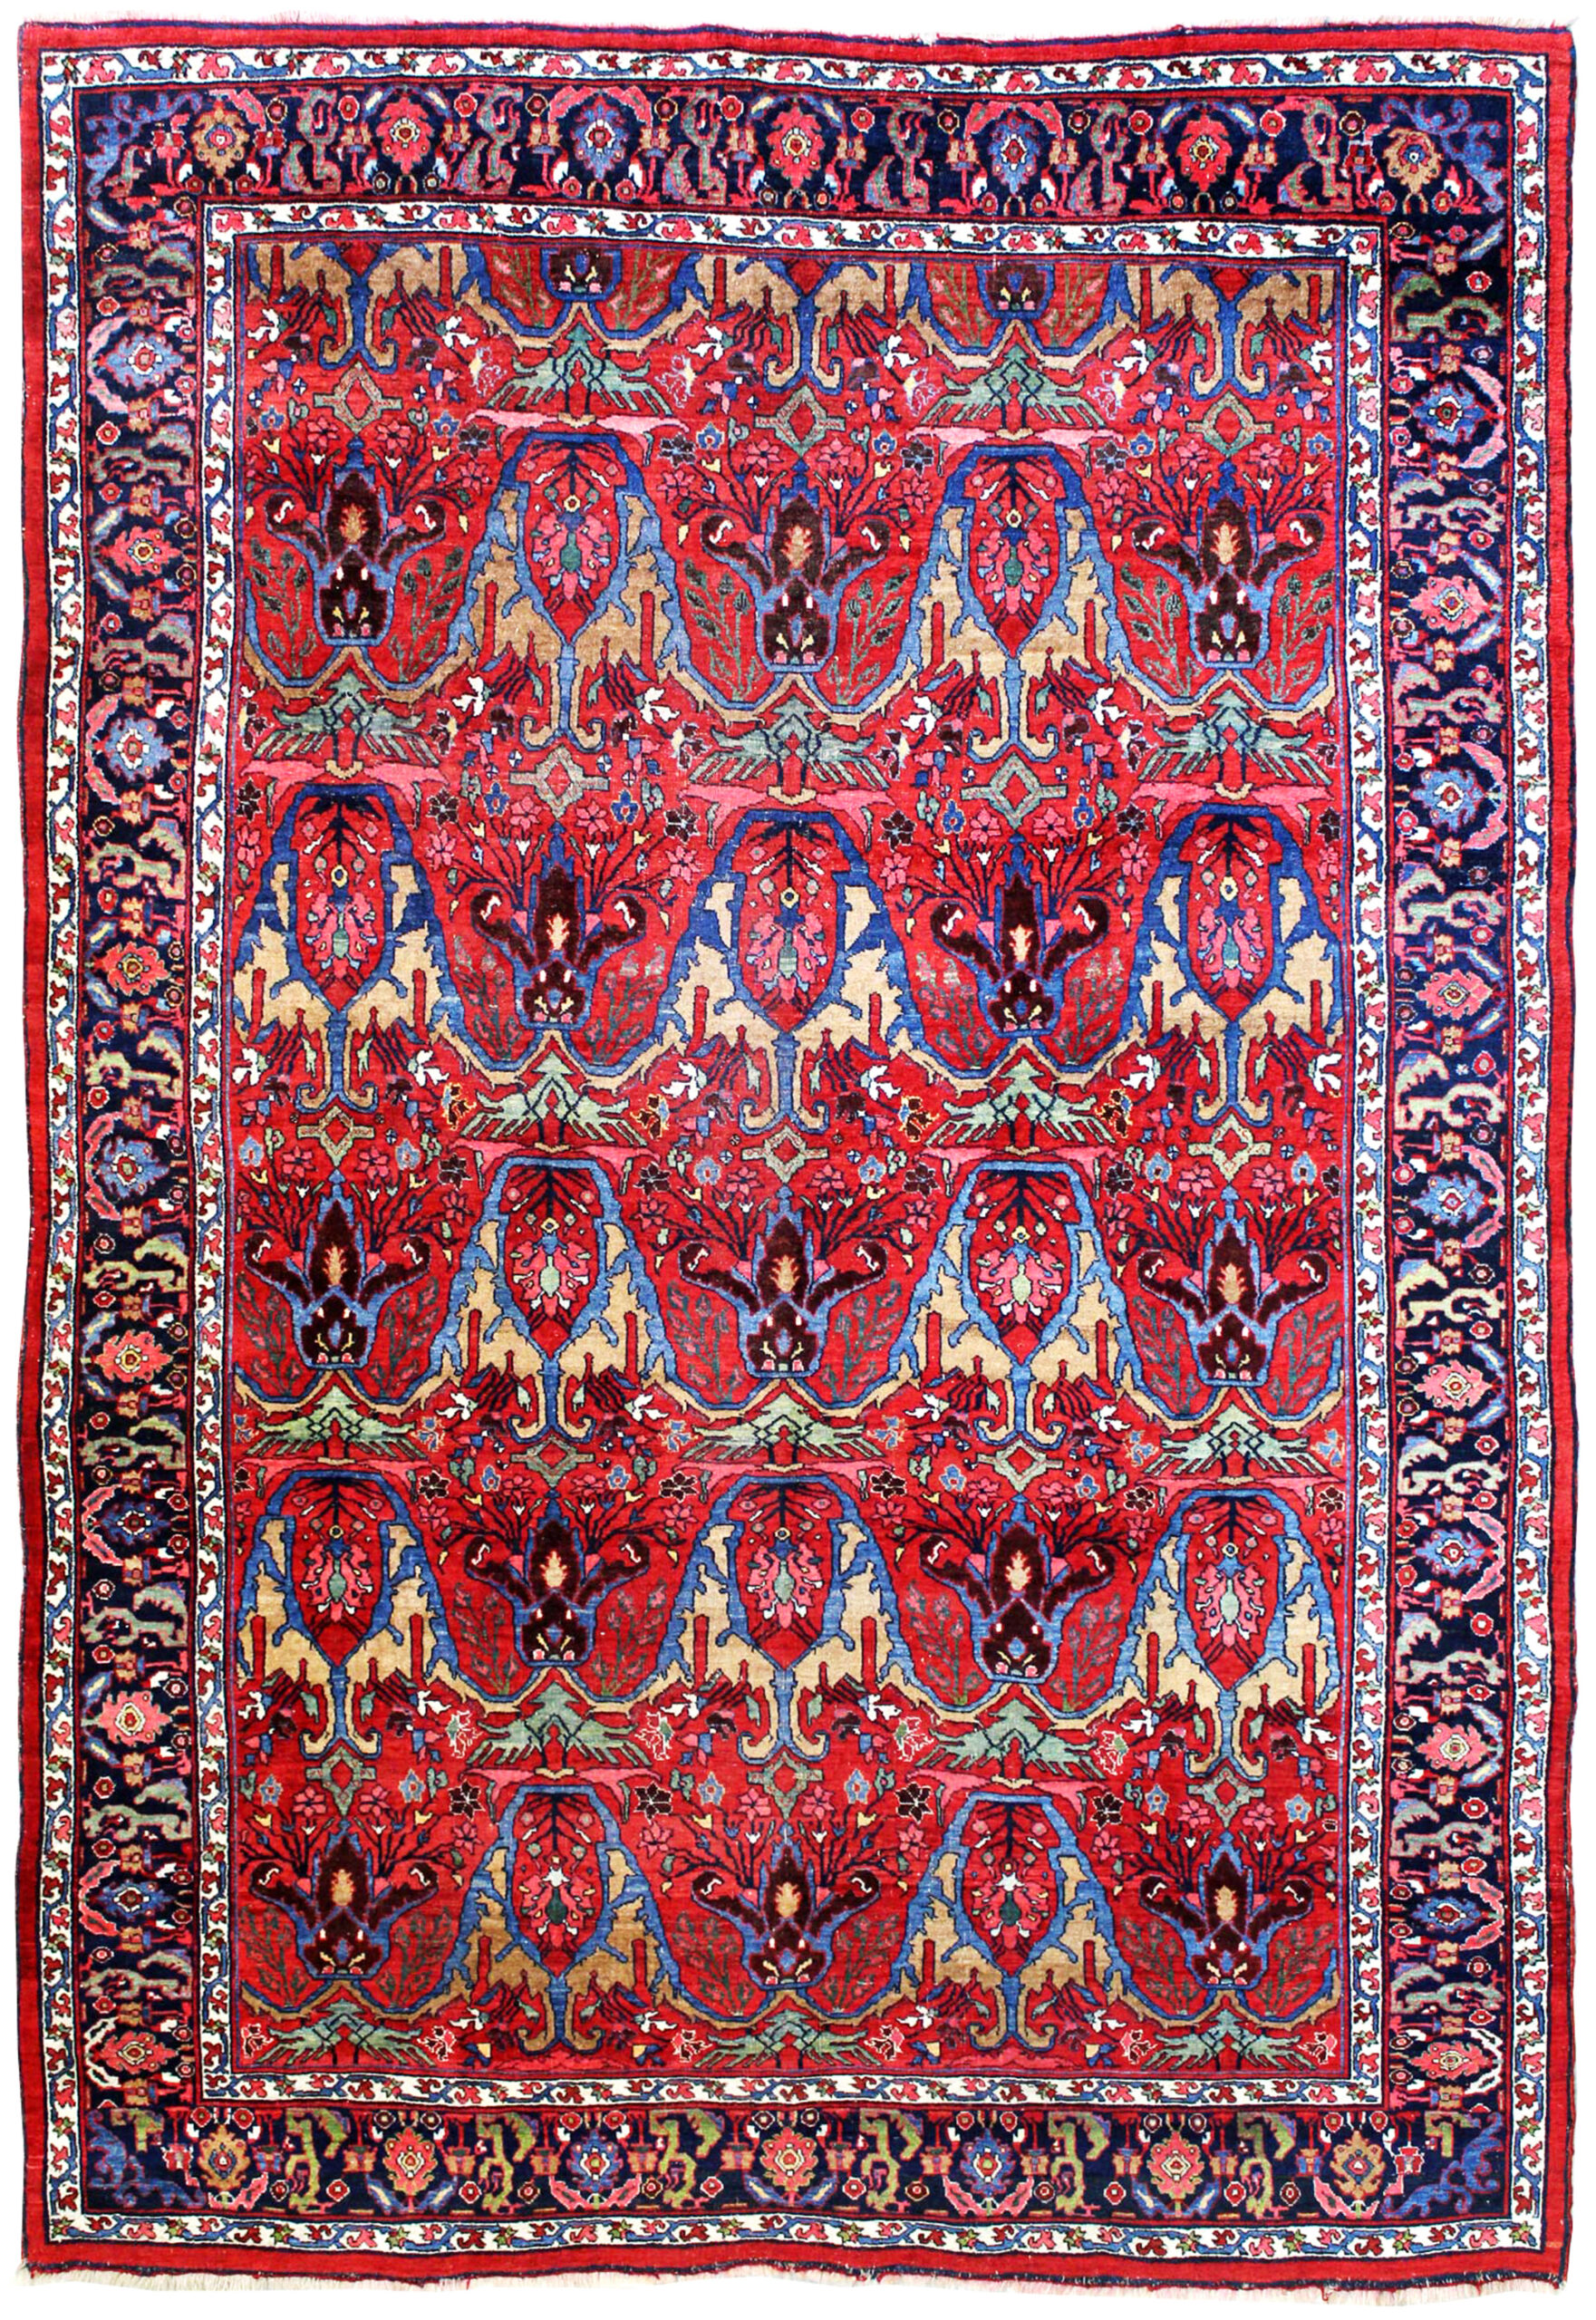 19th century Persian Bidjar carpet with Calyx design